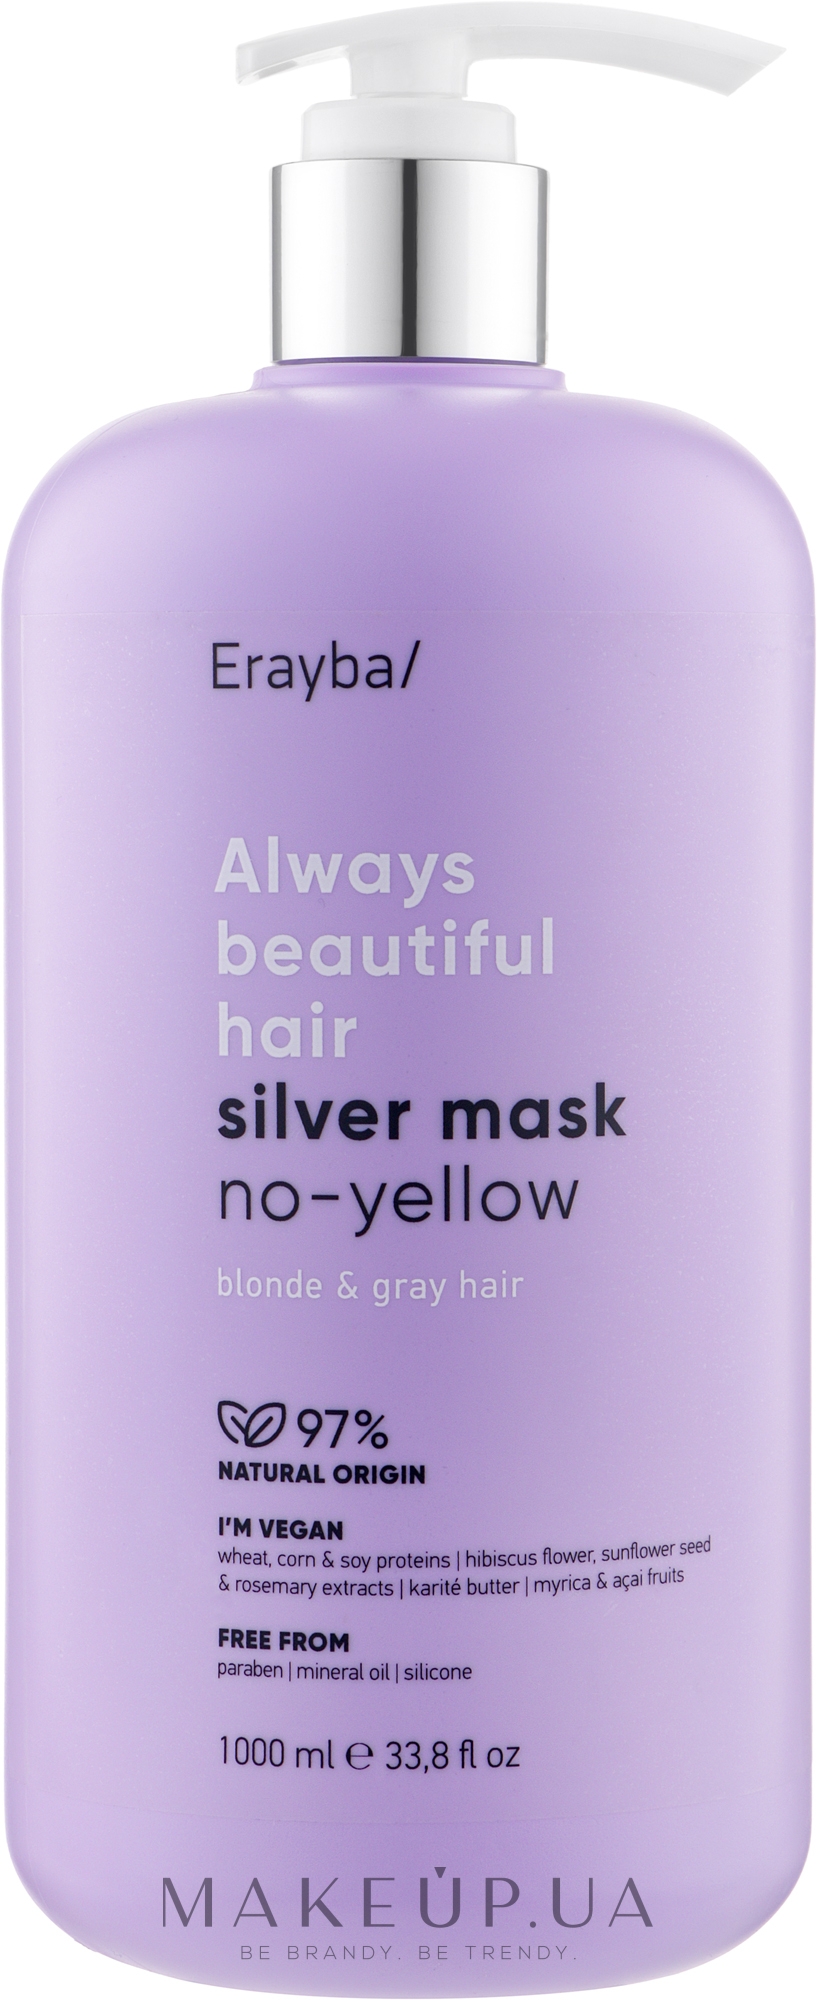 Маска для волос против желтизны - Erayba ABH Silver No-Yellow Mask  — фото 1000ml